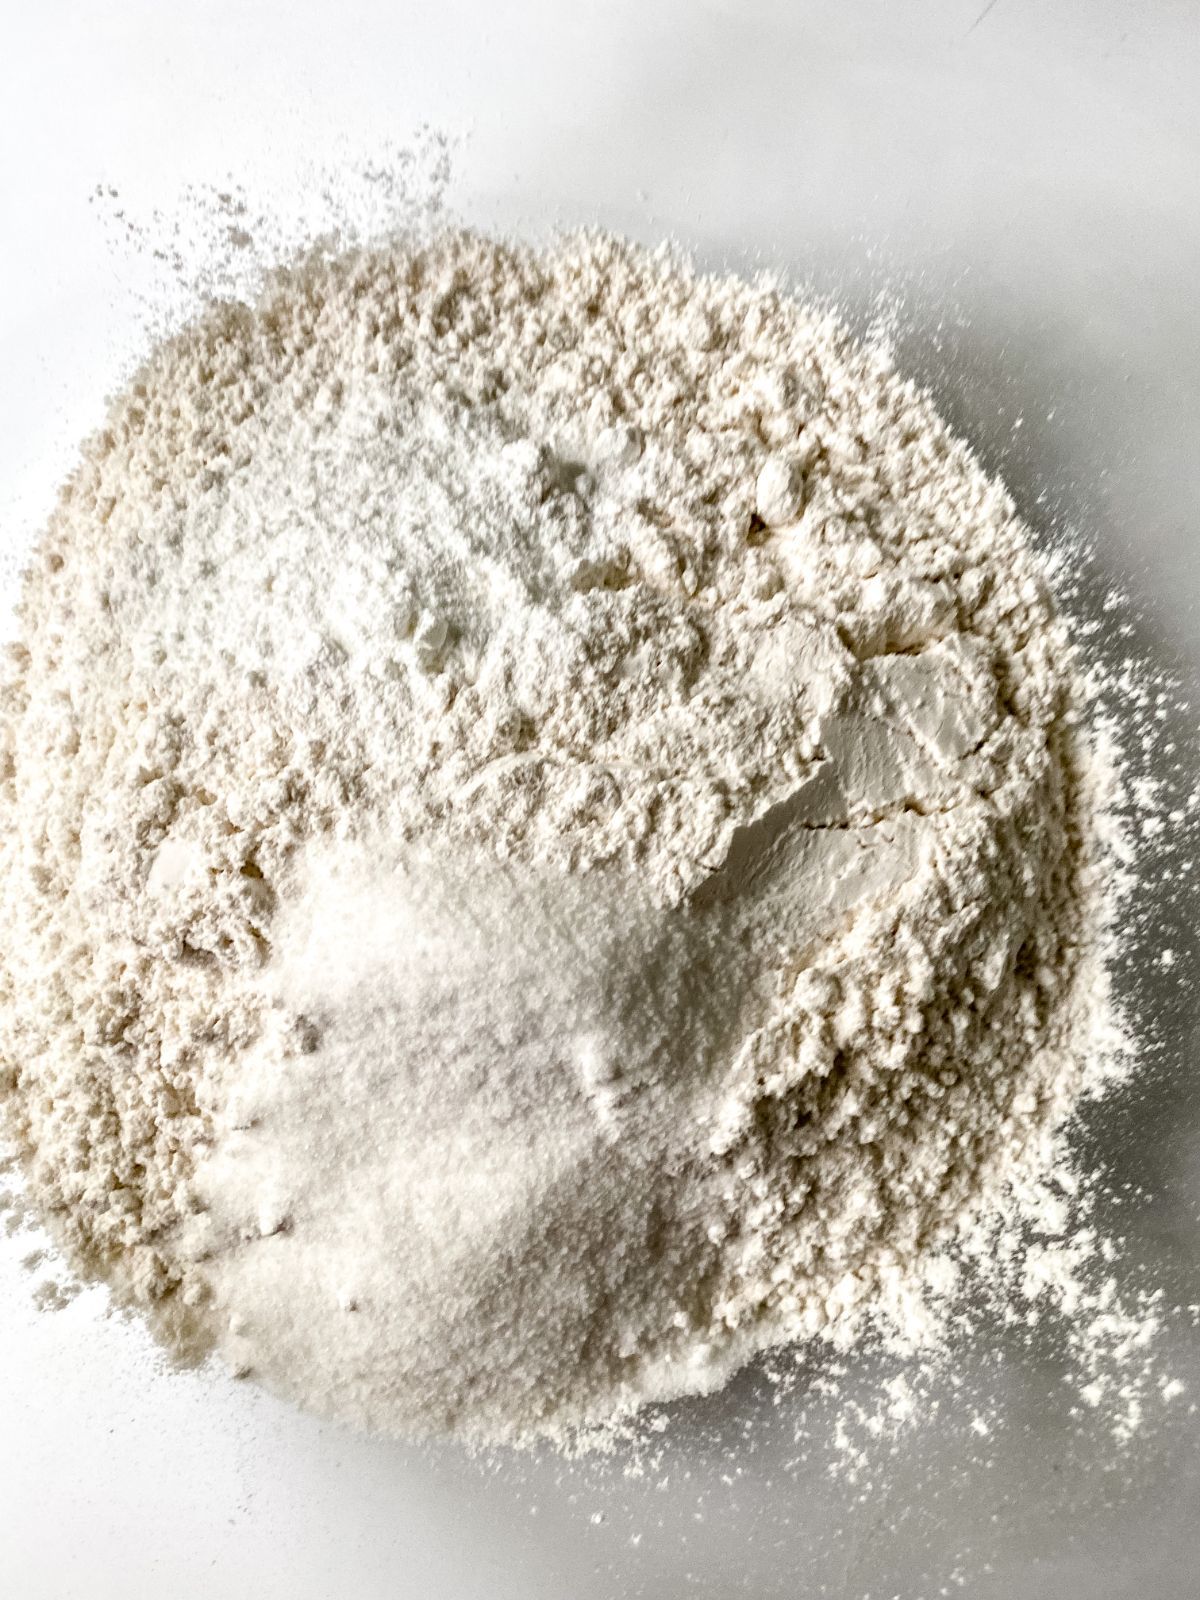 glass bowl of flour and salt